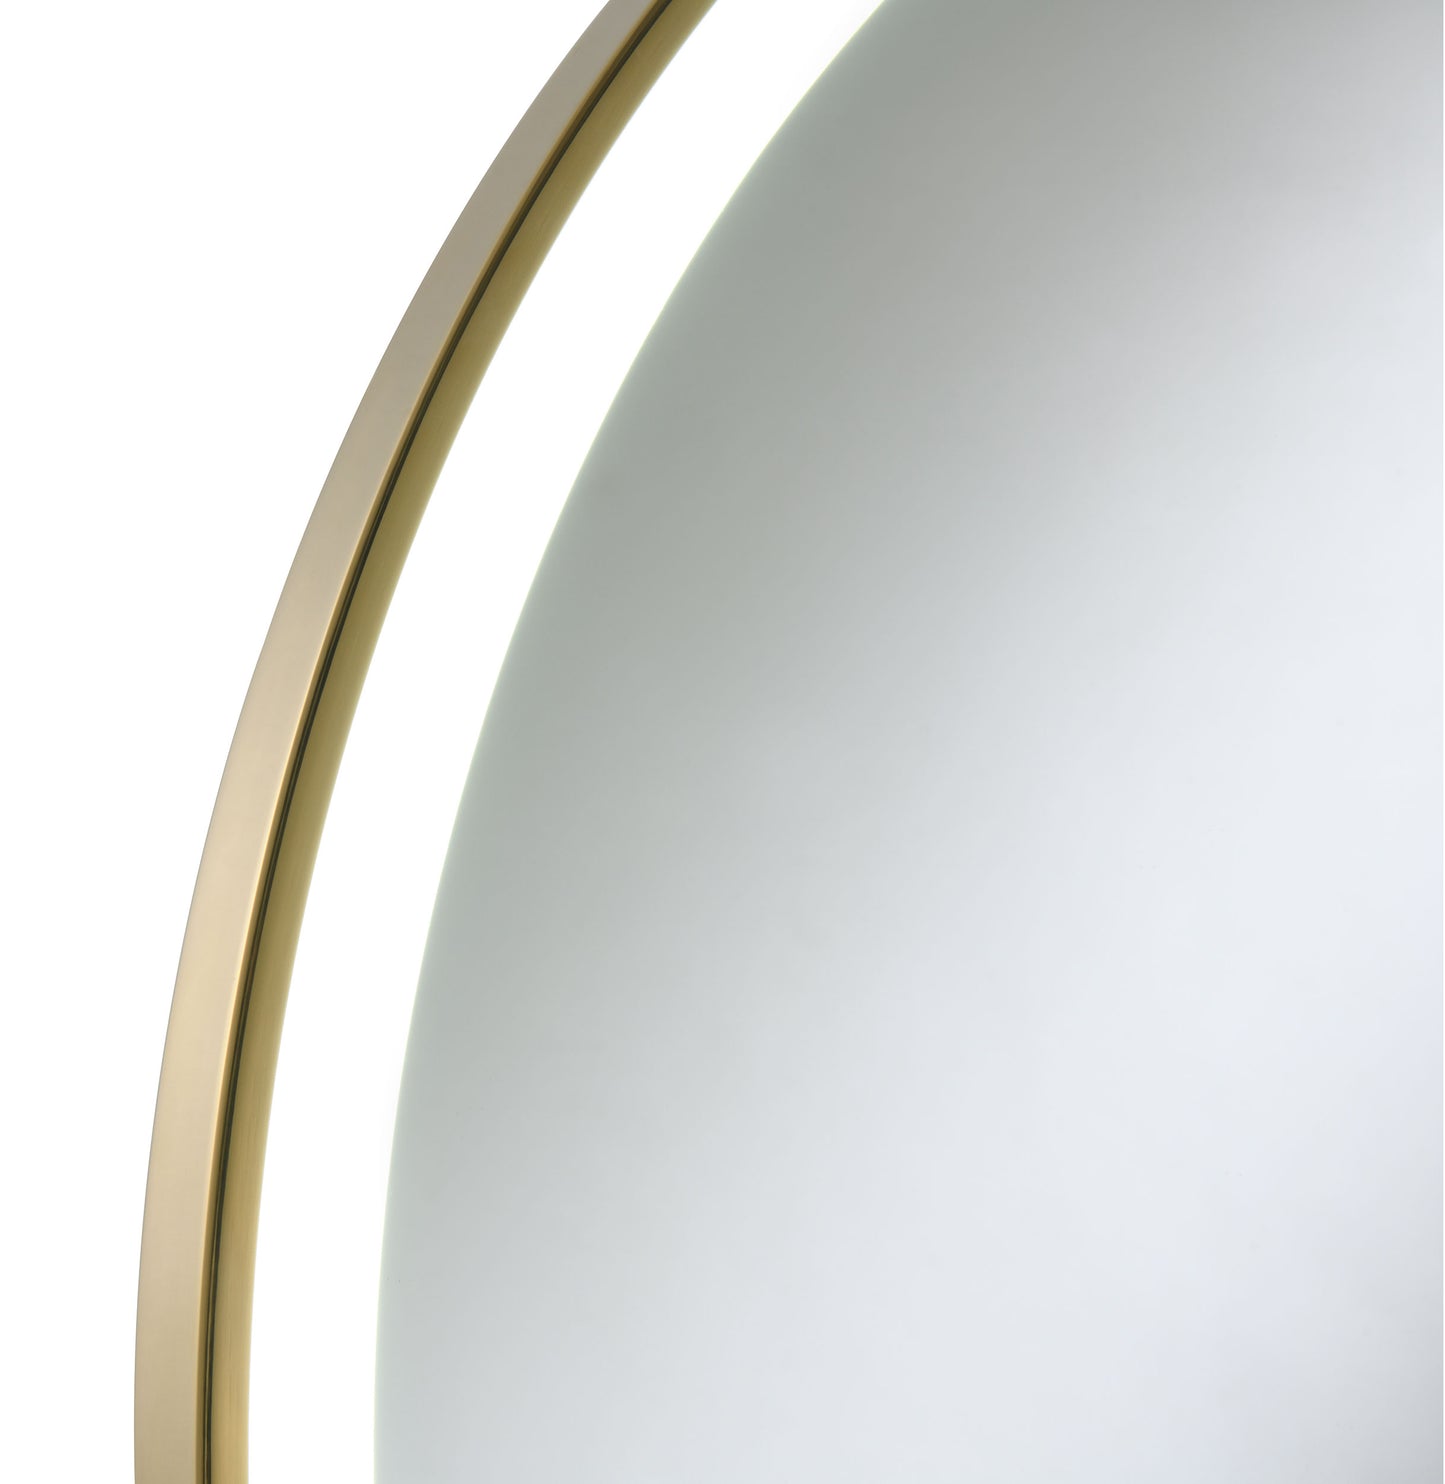 Jocelyn Round Table Top LED Vanity Mirror White Marble Base Gold Frame